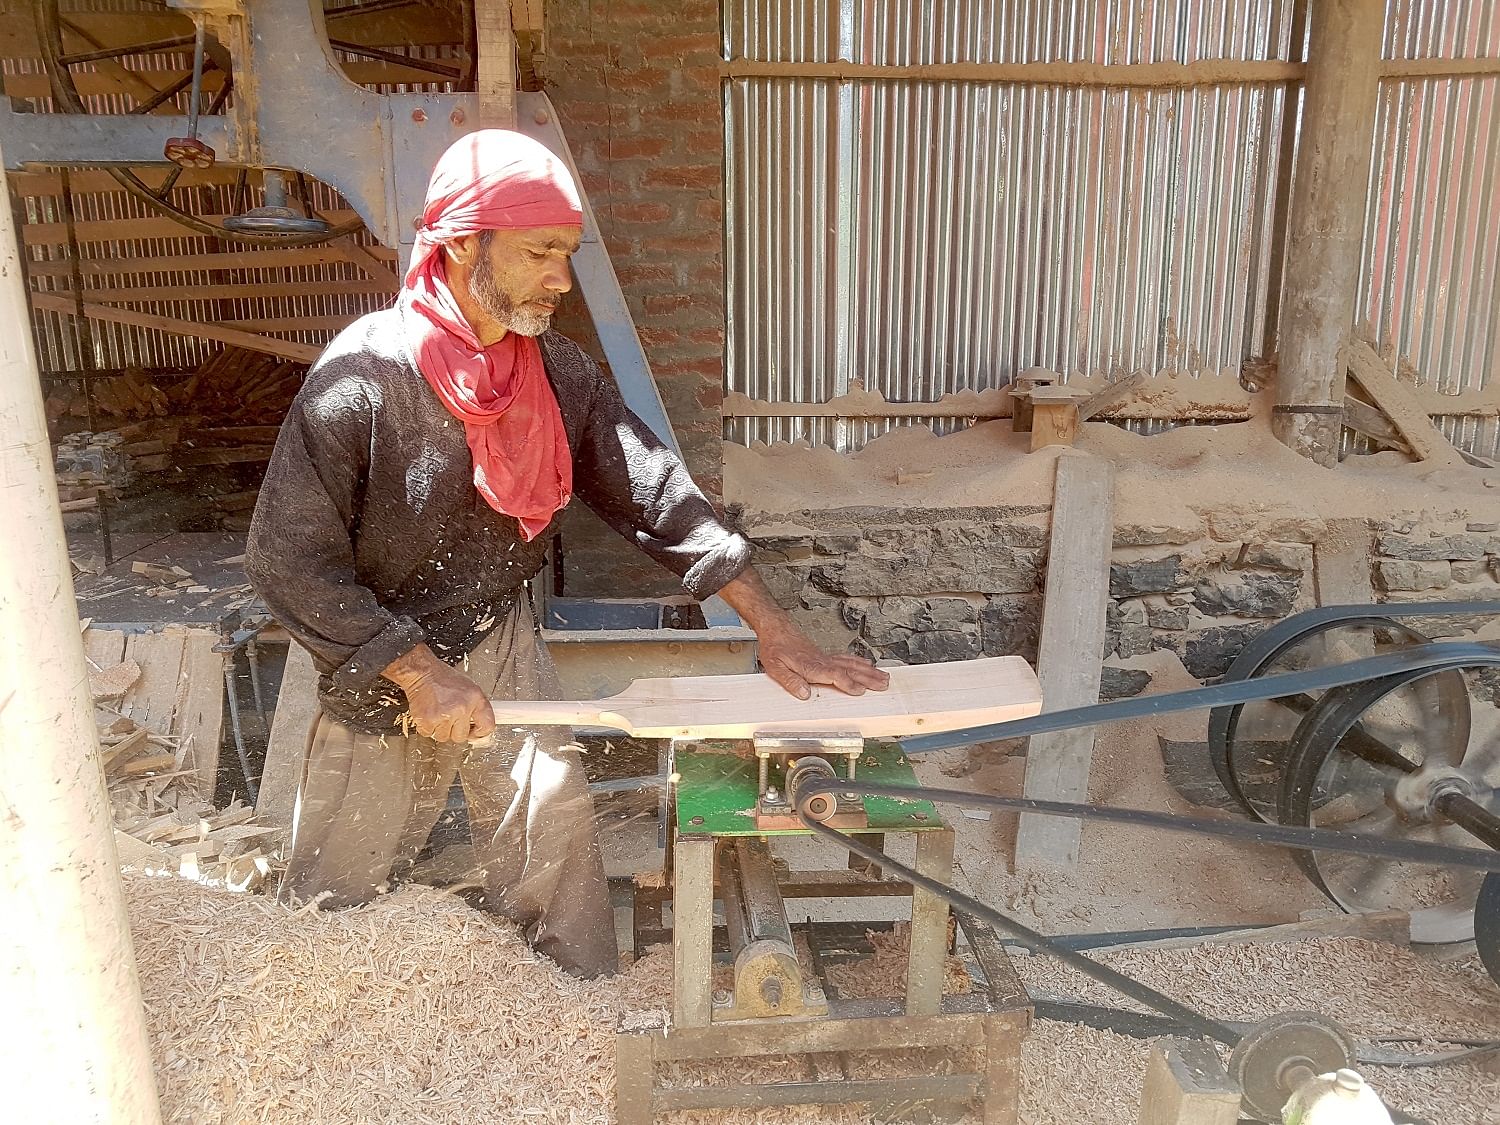 Cricket-bat making in Sangam, Kashmir. Photo by author